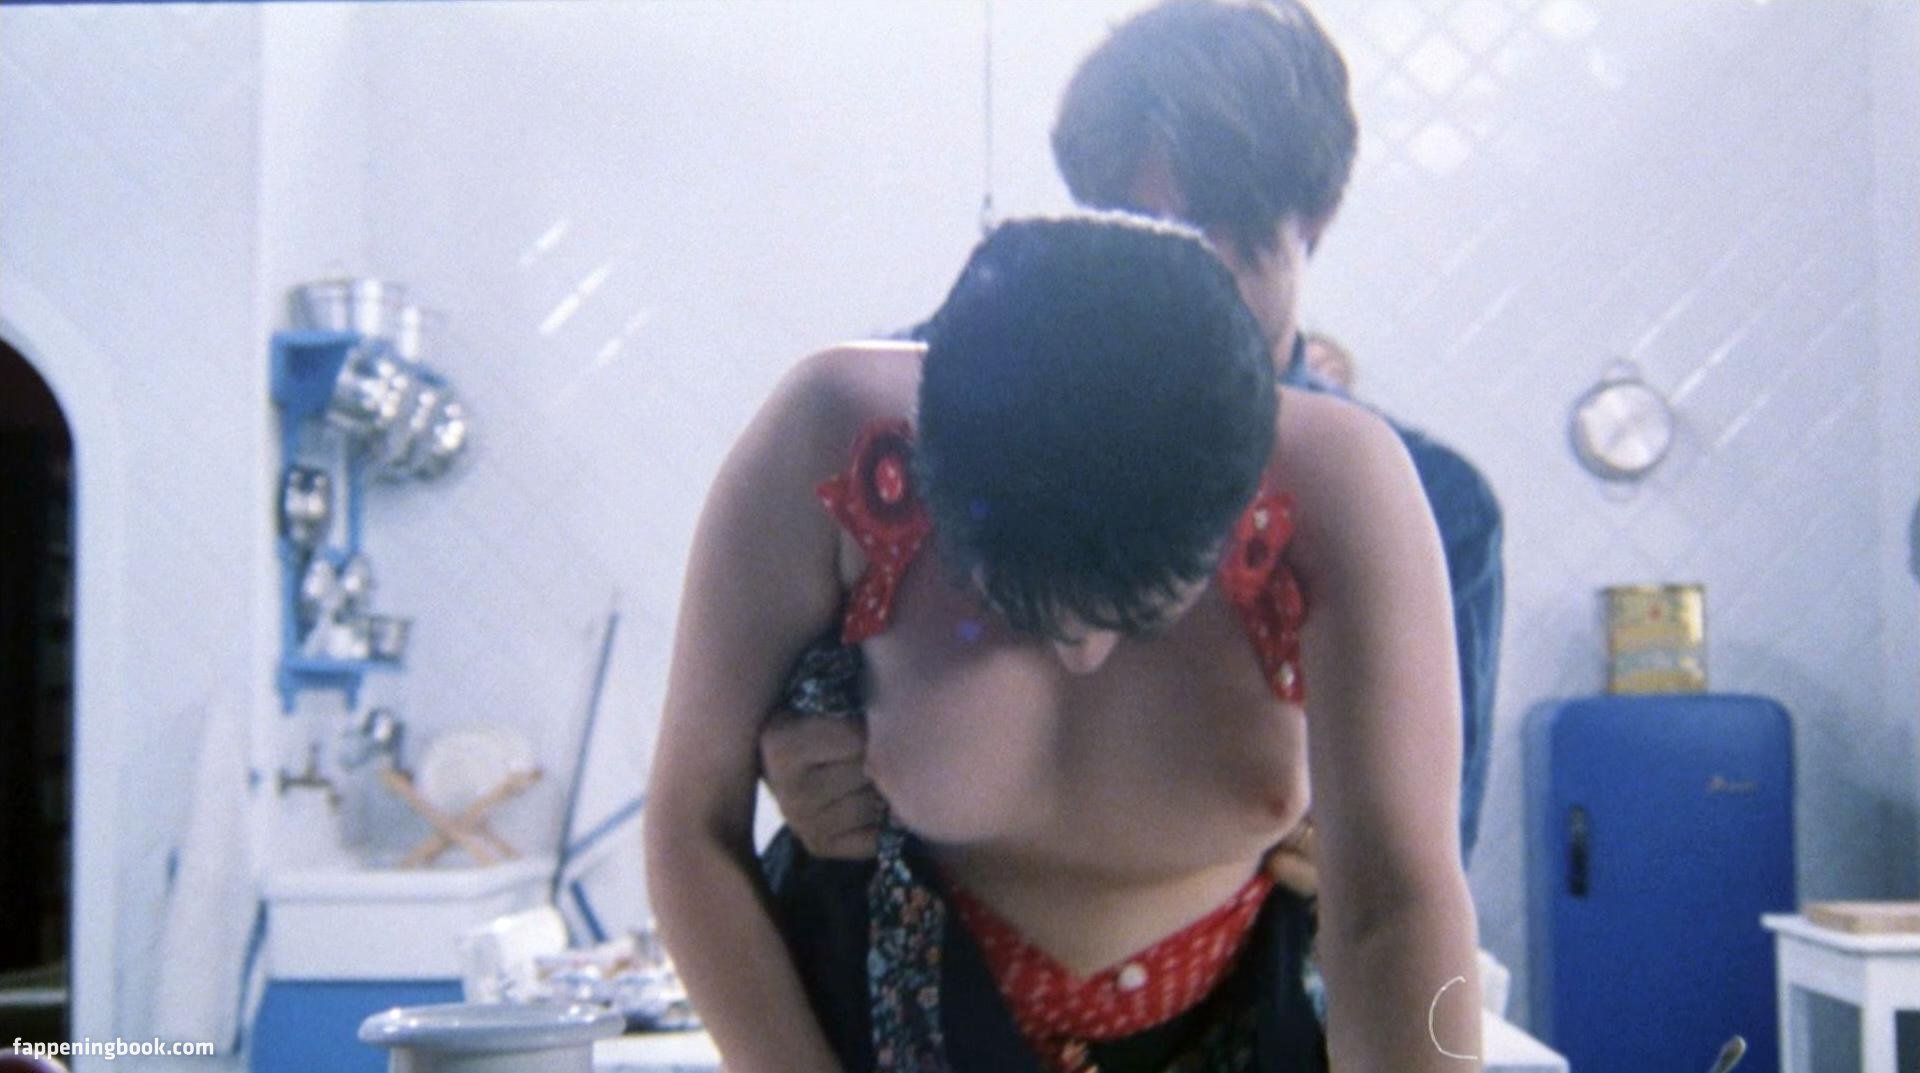 Cristina Garavaglia Nude, The Fappening - Photo #134848 - FappeningBook 